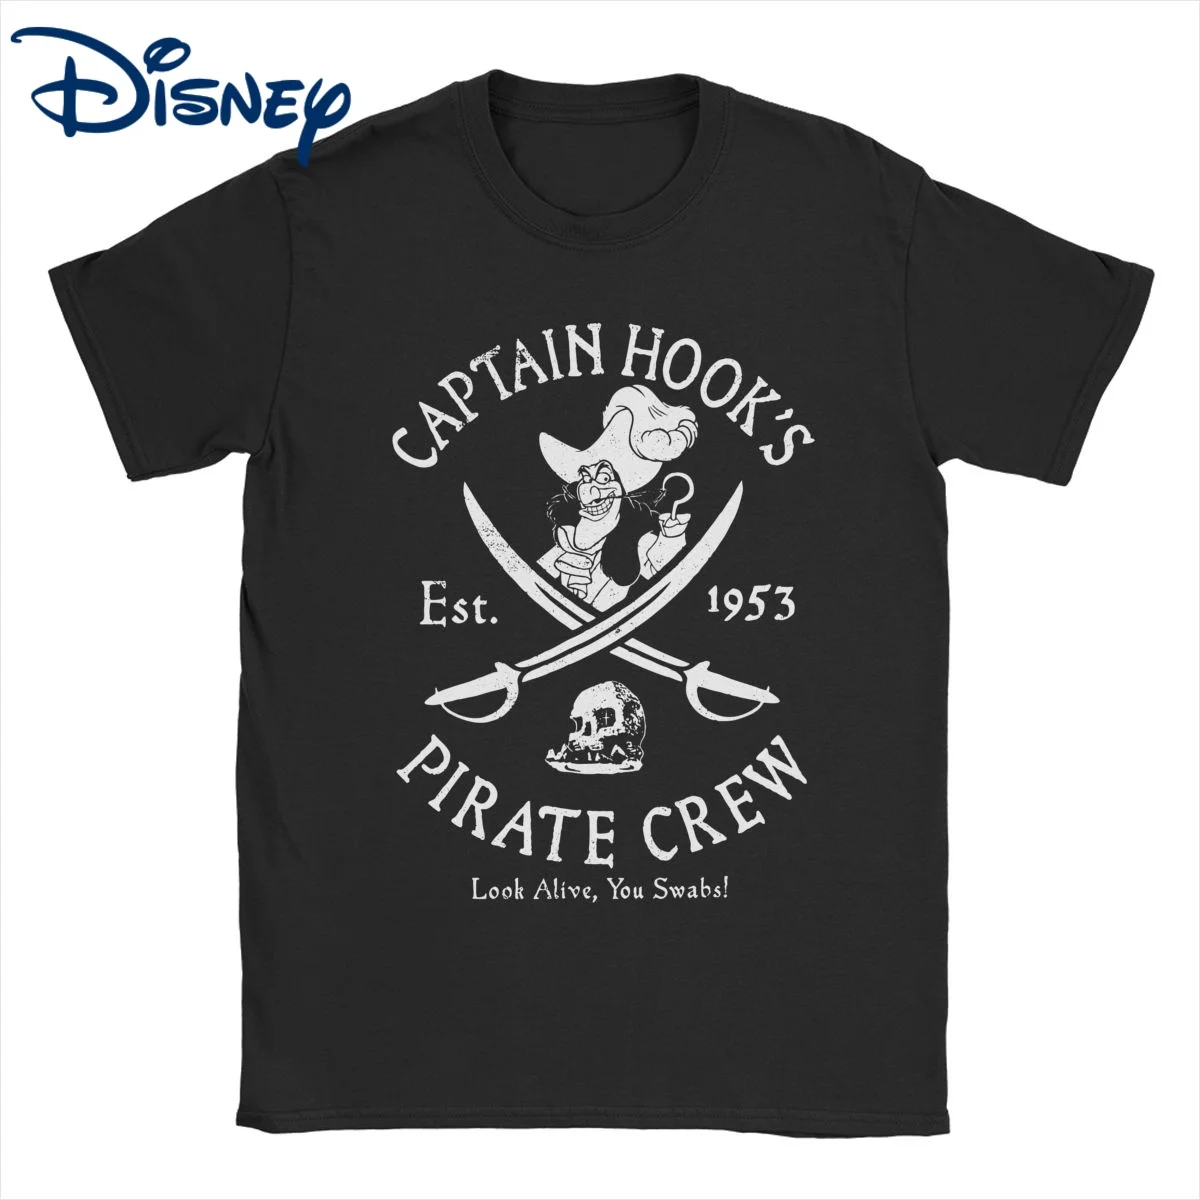 

Disney Villains Captain Hook Pirate Crew T-Shirts Men Women Est 1953 Logo Cool Cotton Tee Shirt T Shirts 4XL 5XL Clothing